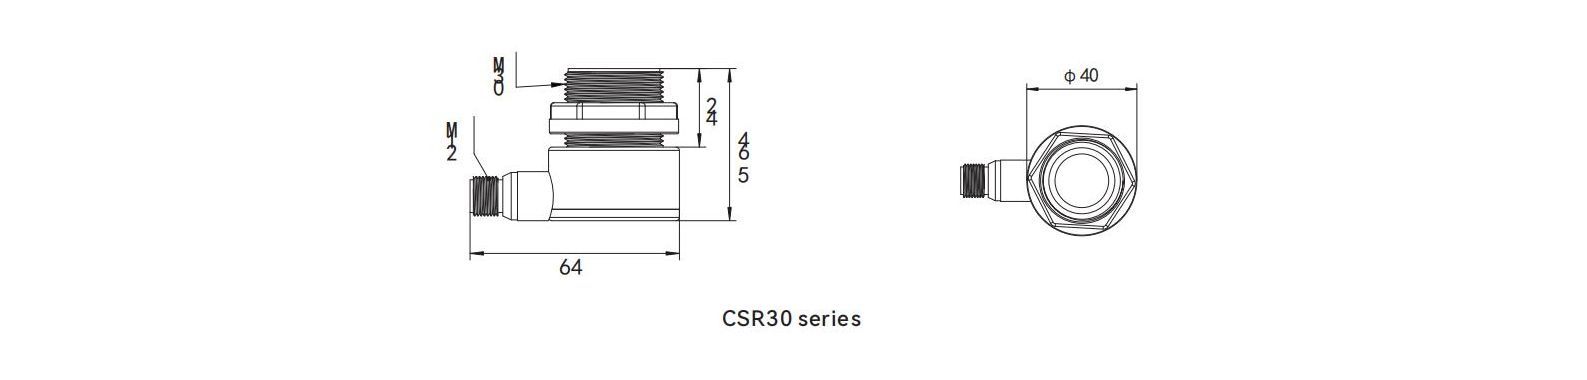 Dimensions of sonic ultrasonic CSR30 series